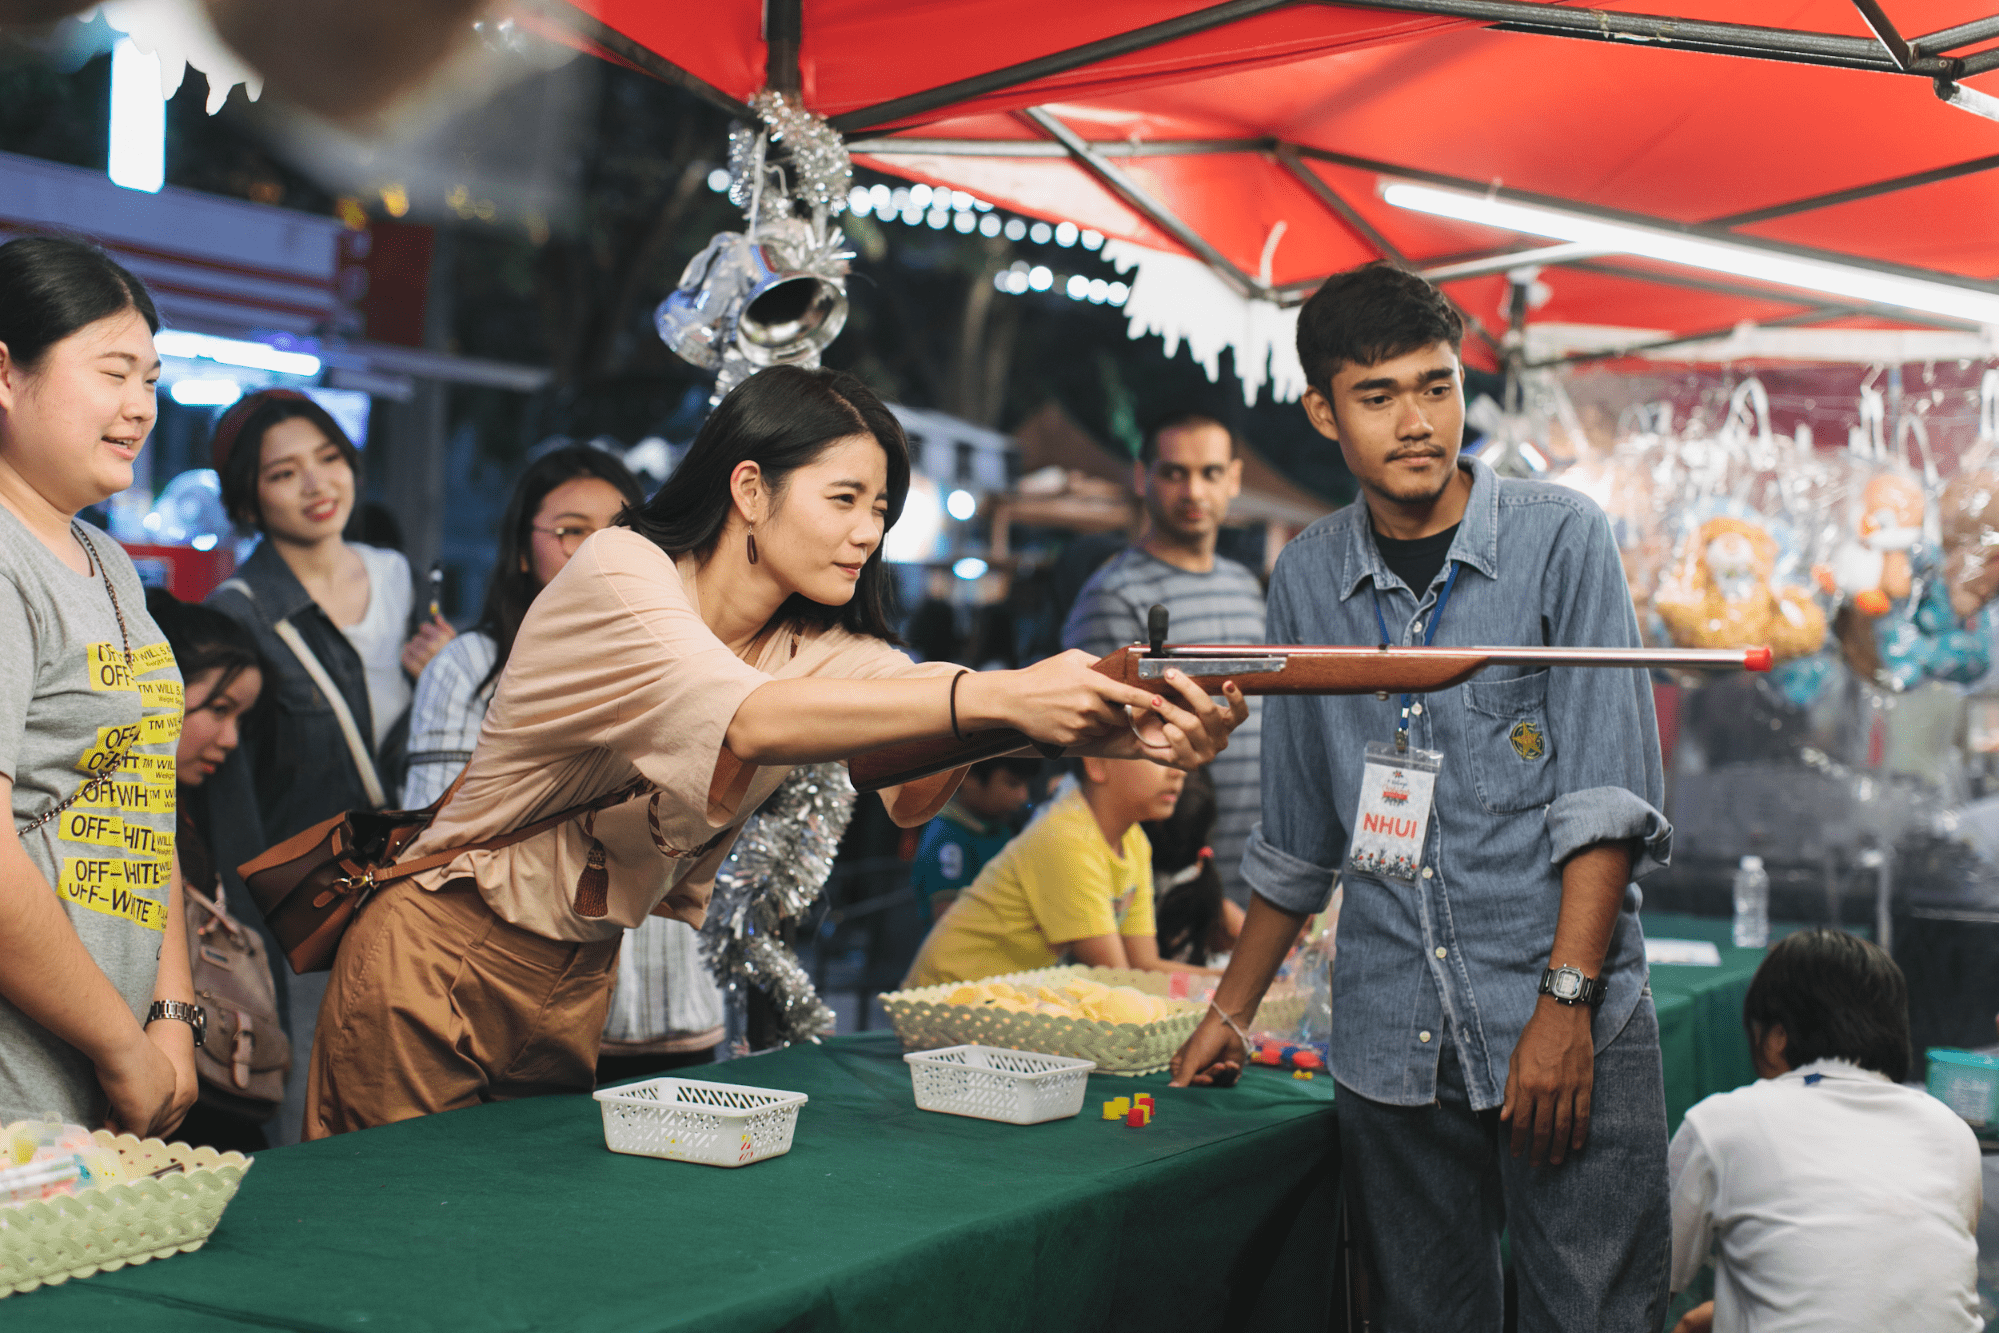 Bangkok's Christmas market with games and fun activities